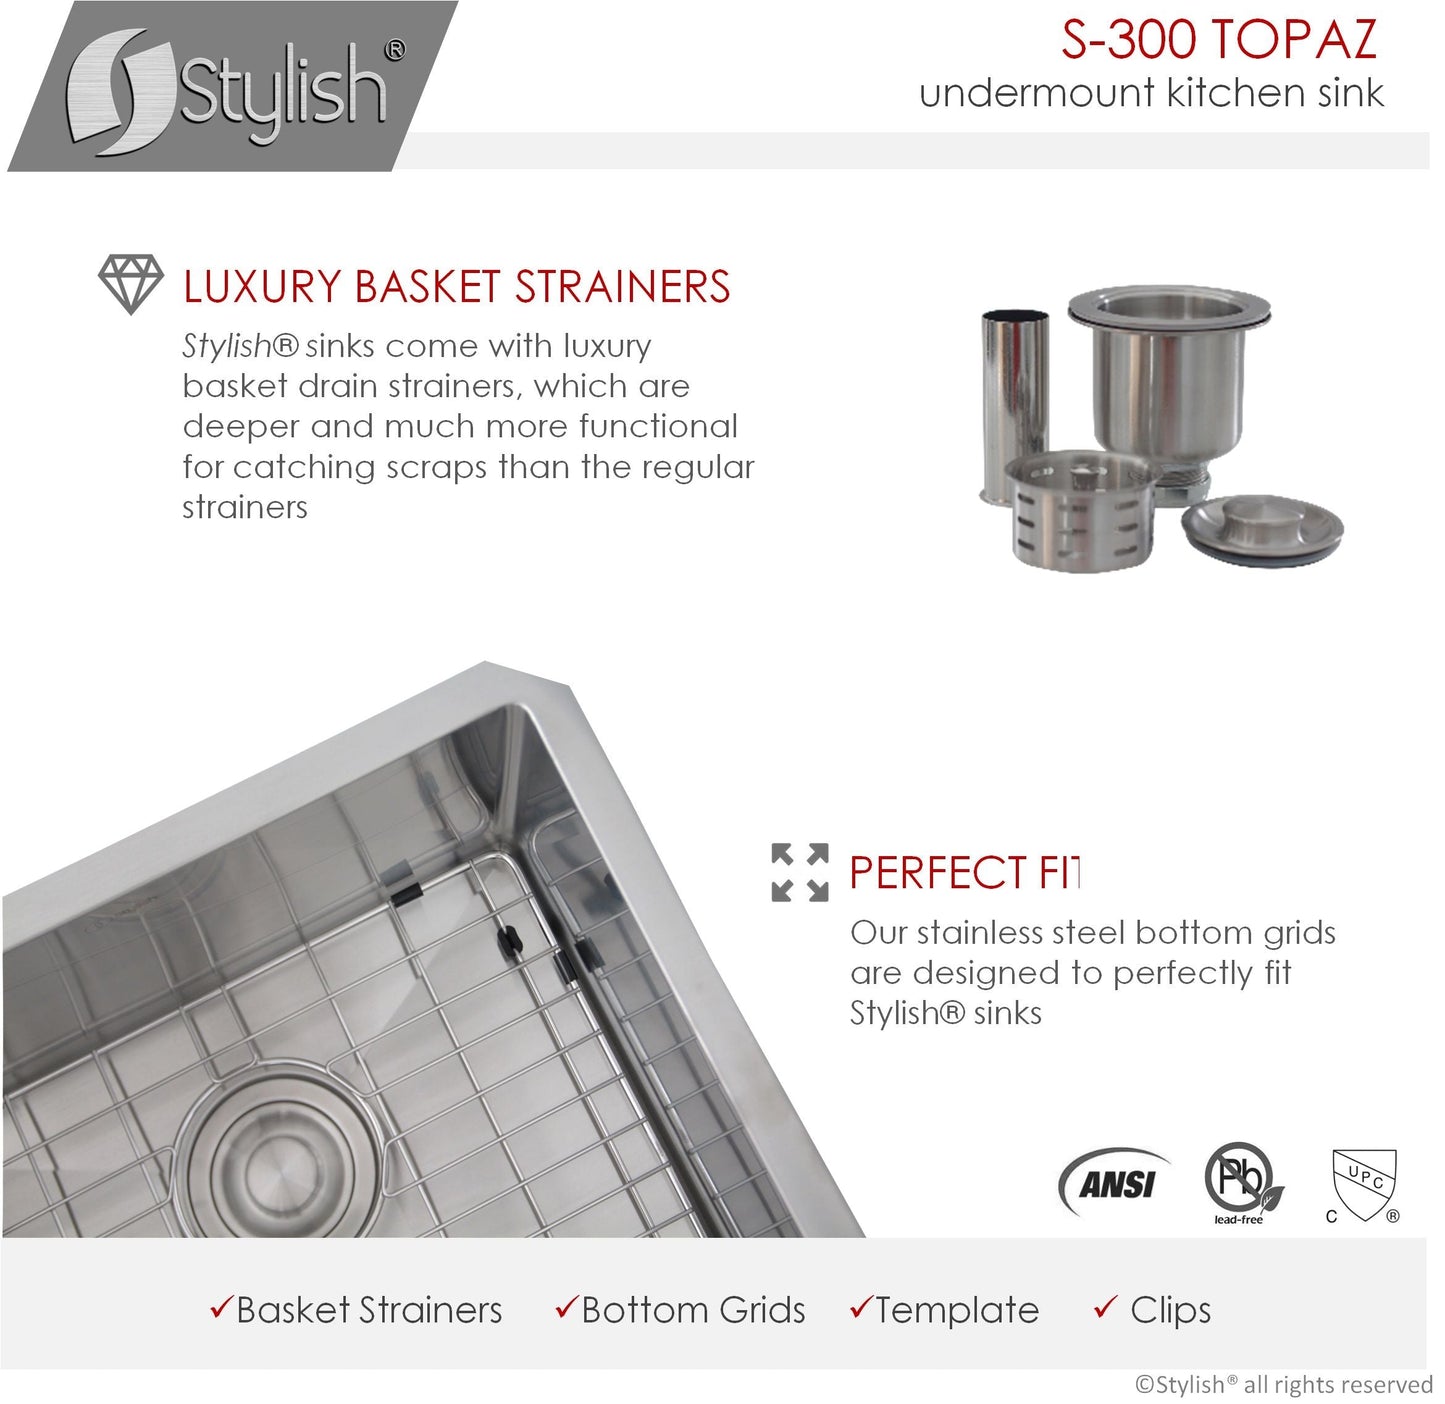 Stylish Topaz 28" x 18" Double Bowl Undermount Stainless Steel Kitchen Sink S-300XG